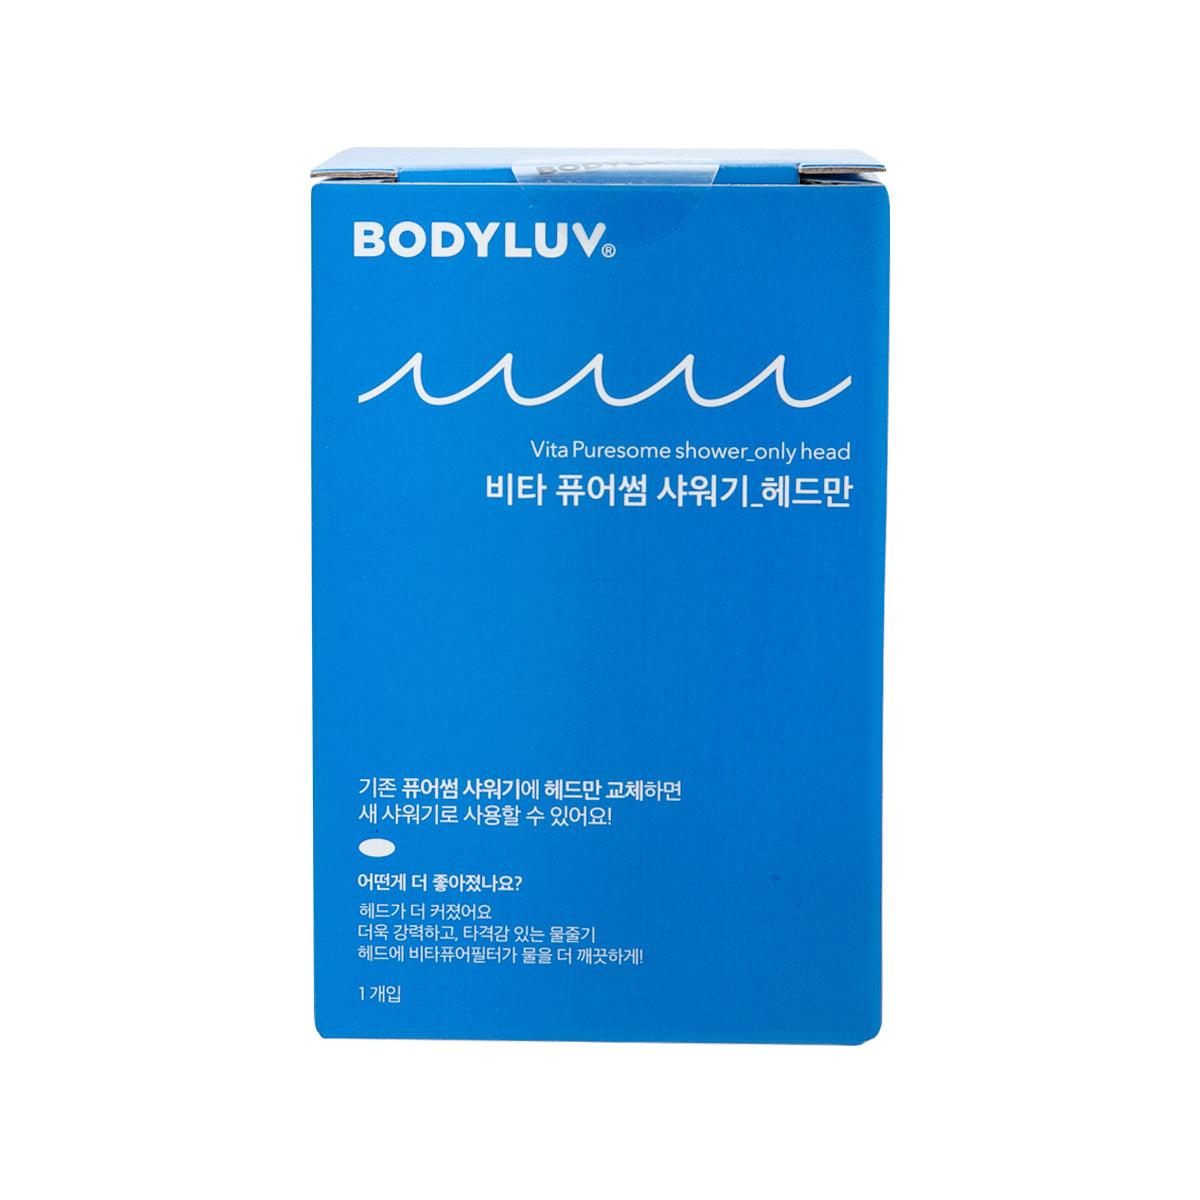 Bodyluv Vita Puresome Shower Only Head Moredeal 比較香港過千間網店 超過一百五十萬件產品